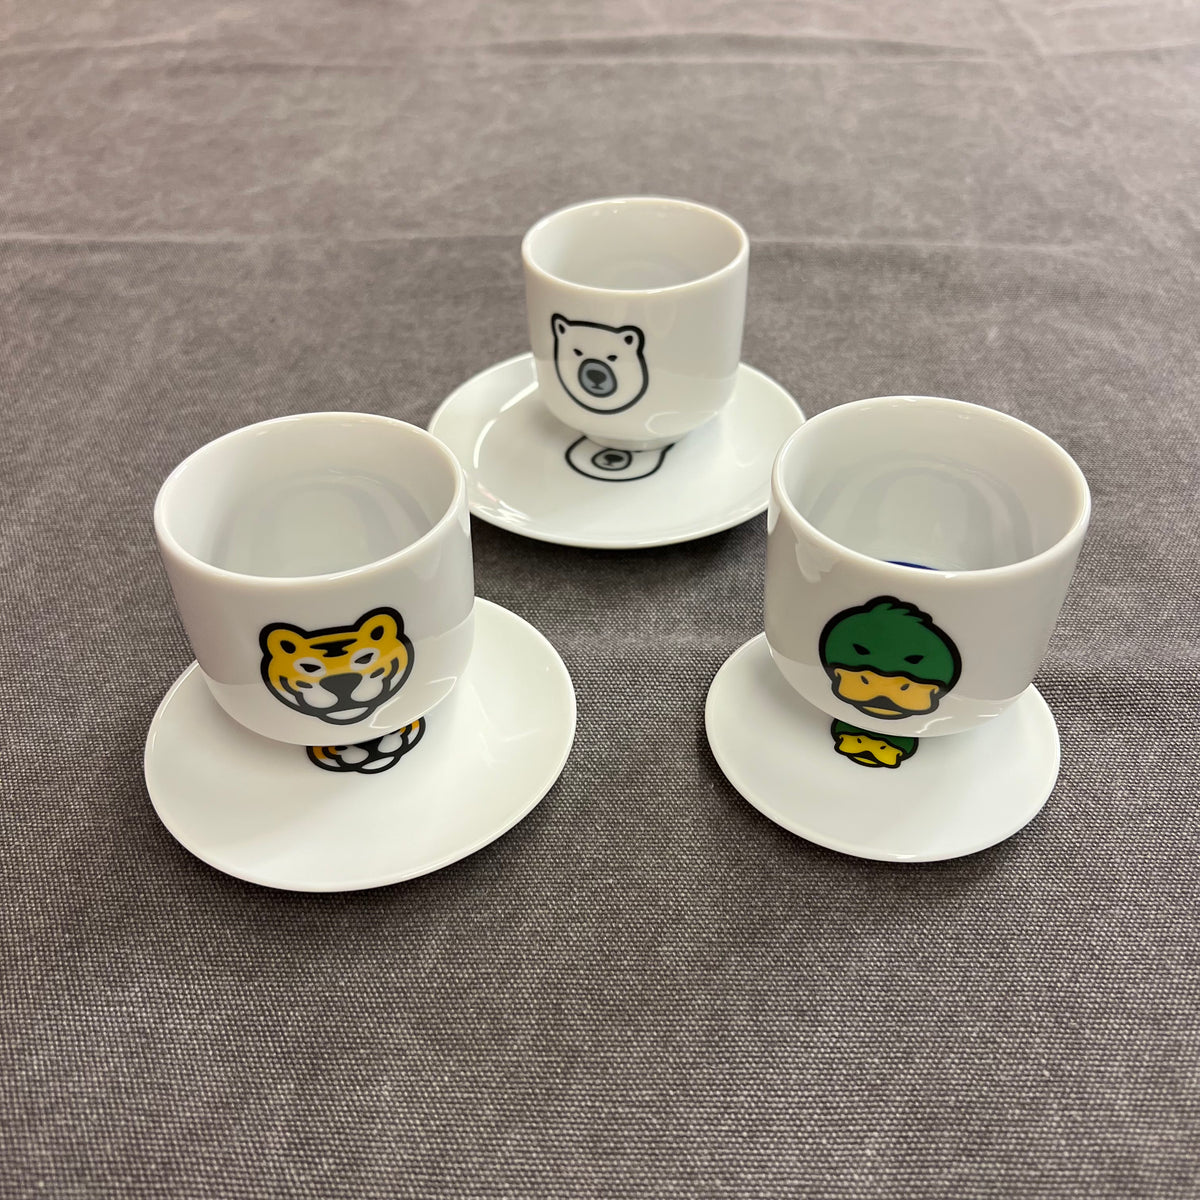 HUMANMADE sake cup set シロクマ&カモ - グラス/カップ